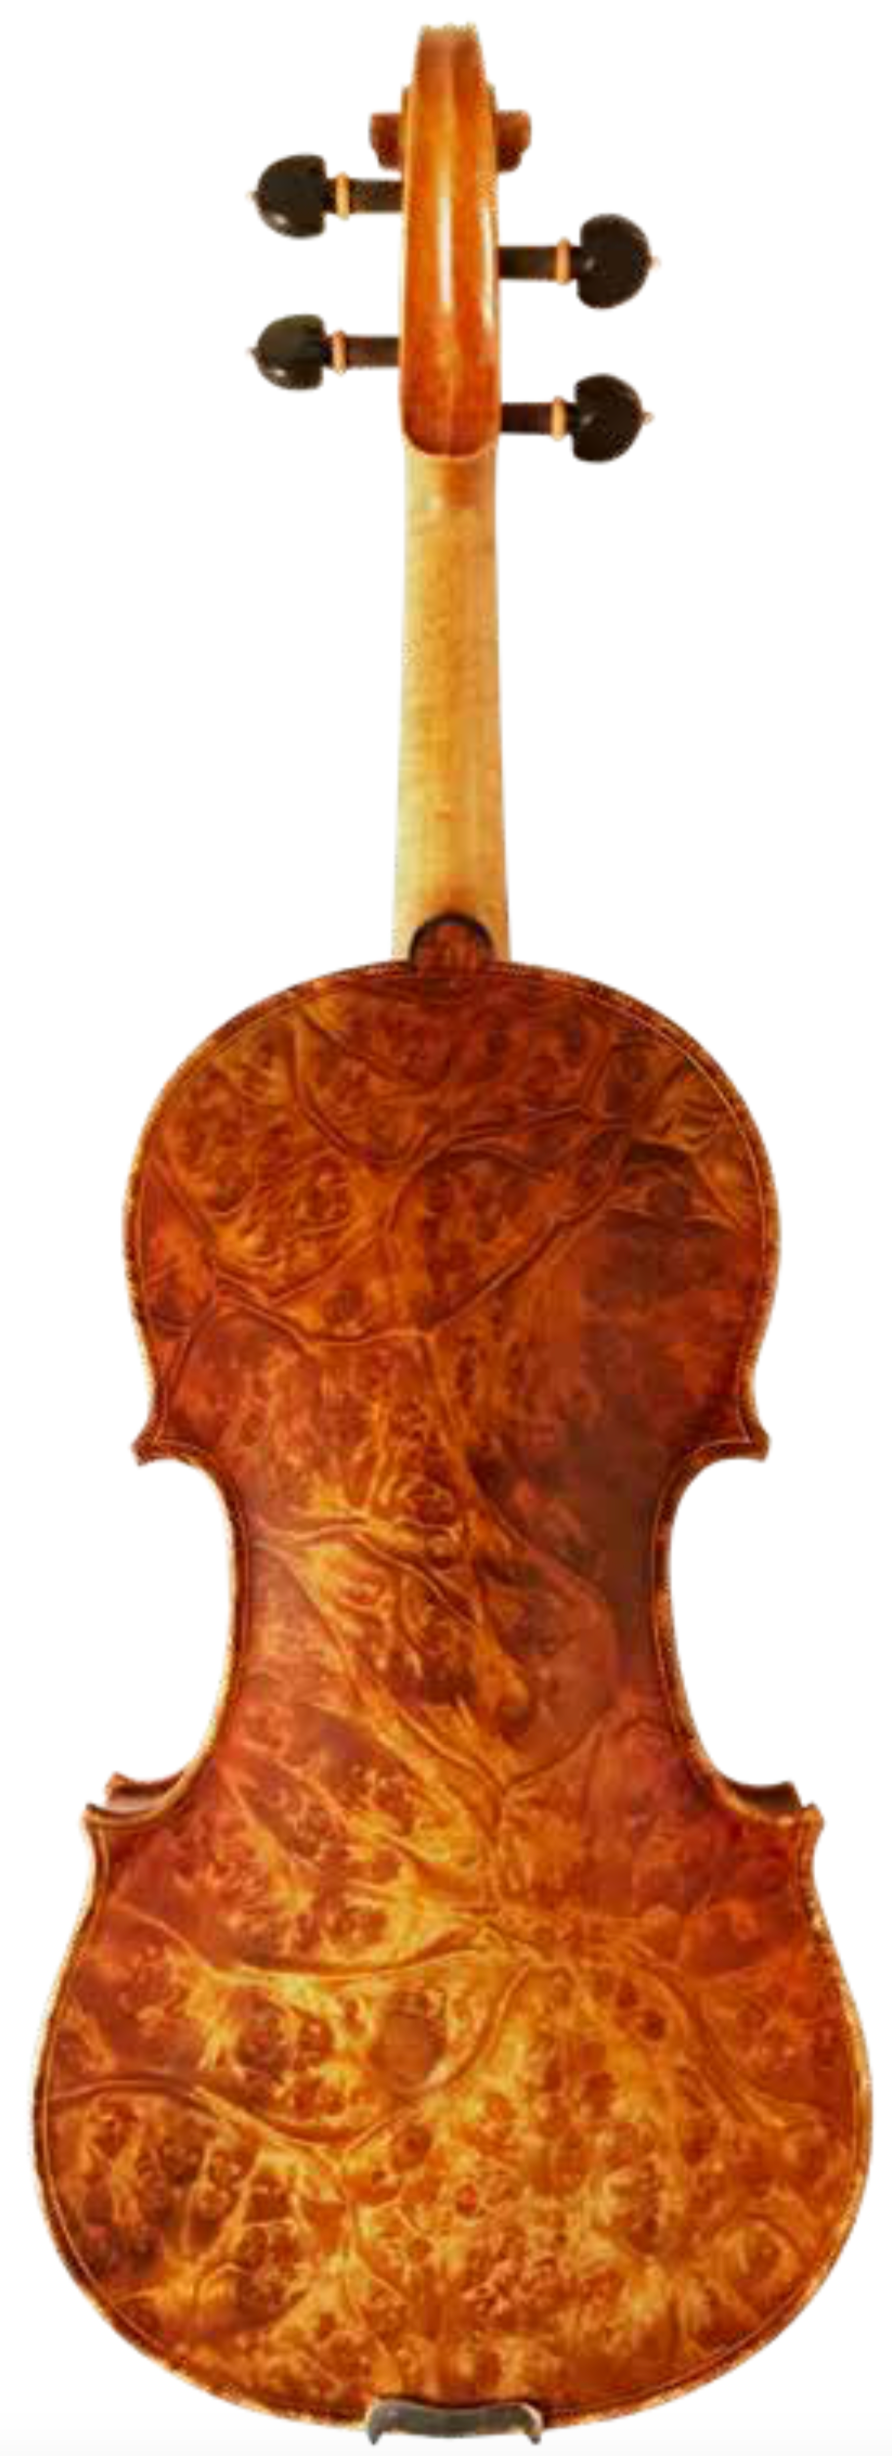 Maple Leaf Strings Burled Maple Violin back